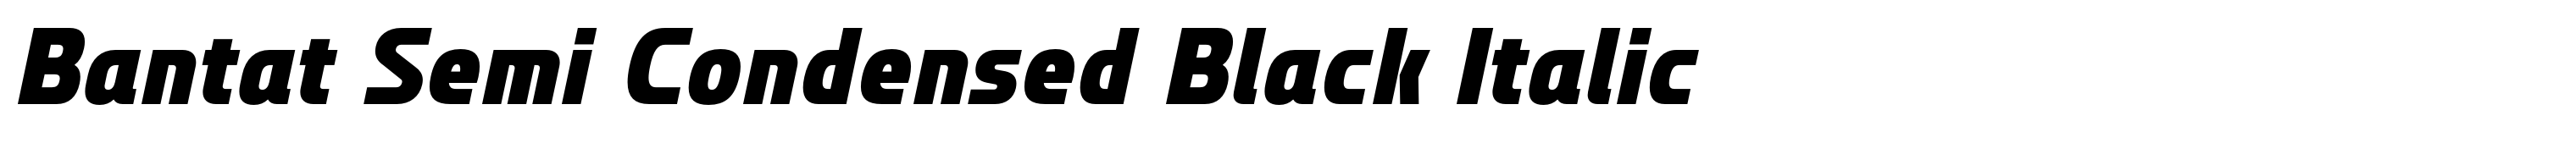 Bantat Semi Condensed Black Italic